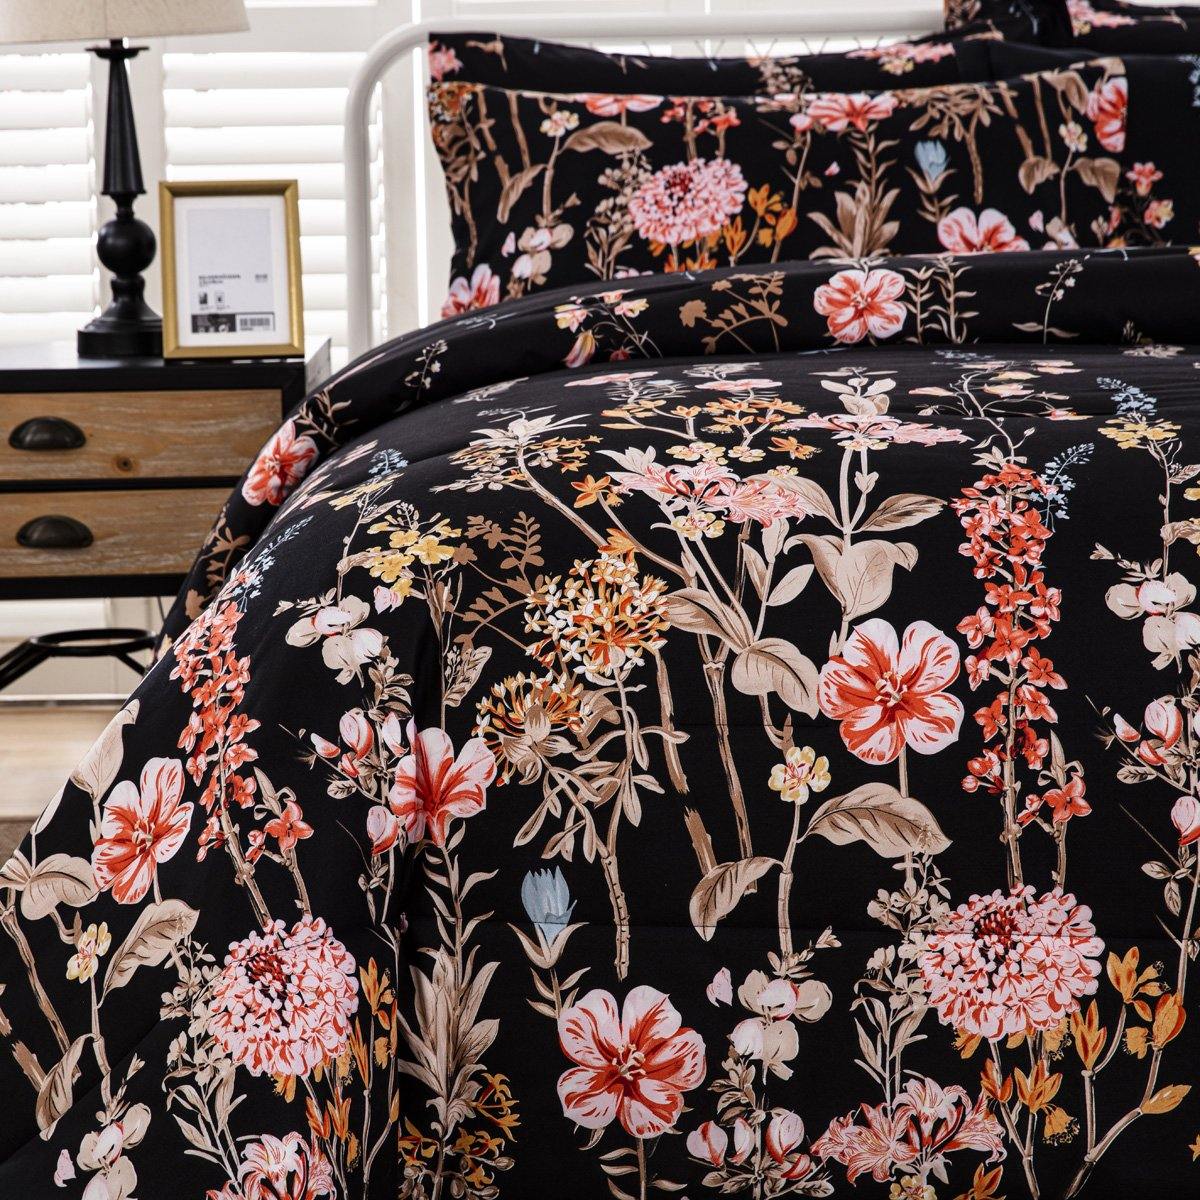 WONGS BEDDING Blossoming flowers Comforter set bedroom bedding 3 Pieces Bedding Comforter with 2 Pillow Cases - Wongs bedding